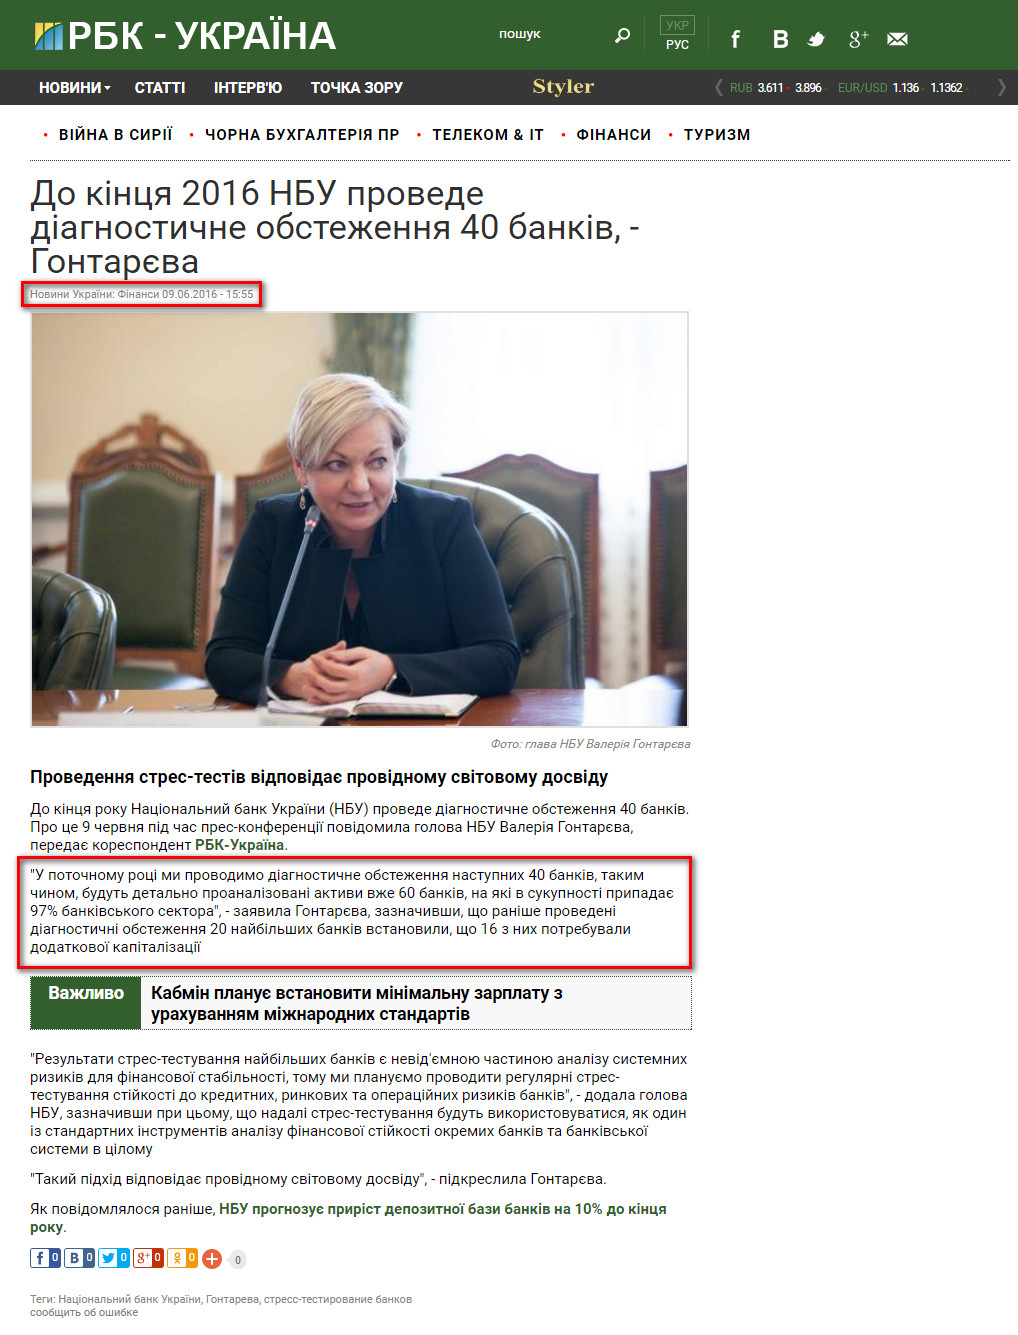 https://www.rbcua.com/ukr/news/kontsa-2016-nbu-provedet-diagnosticheskoe-1465476897.html